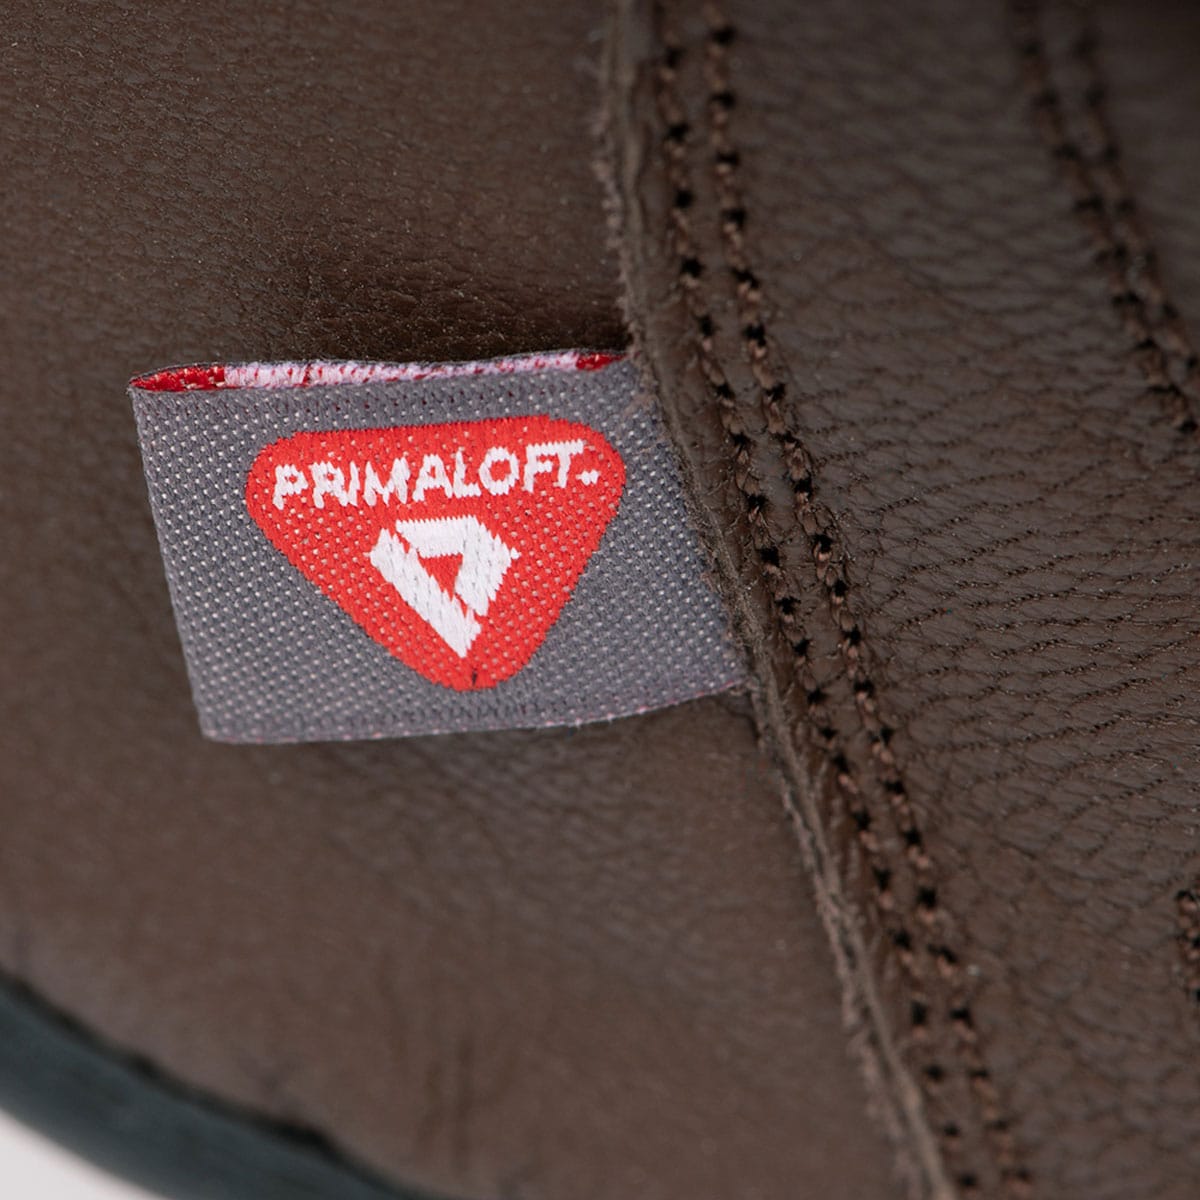 Oxford Hamilton Leather Gloves WP - Brown Primaloft label